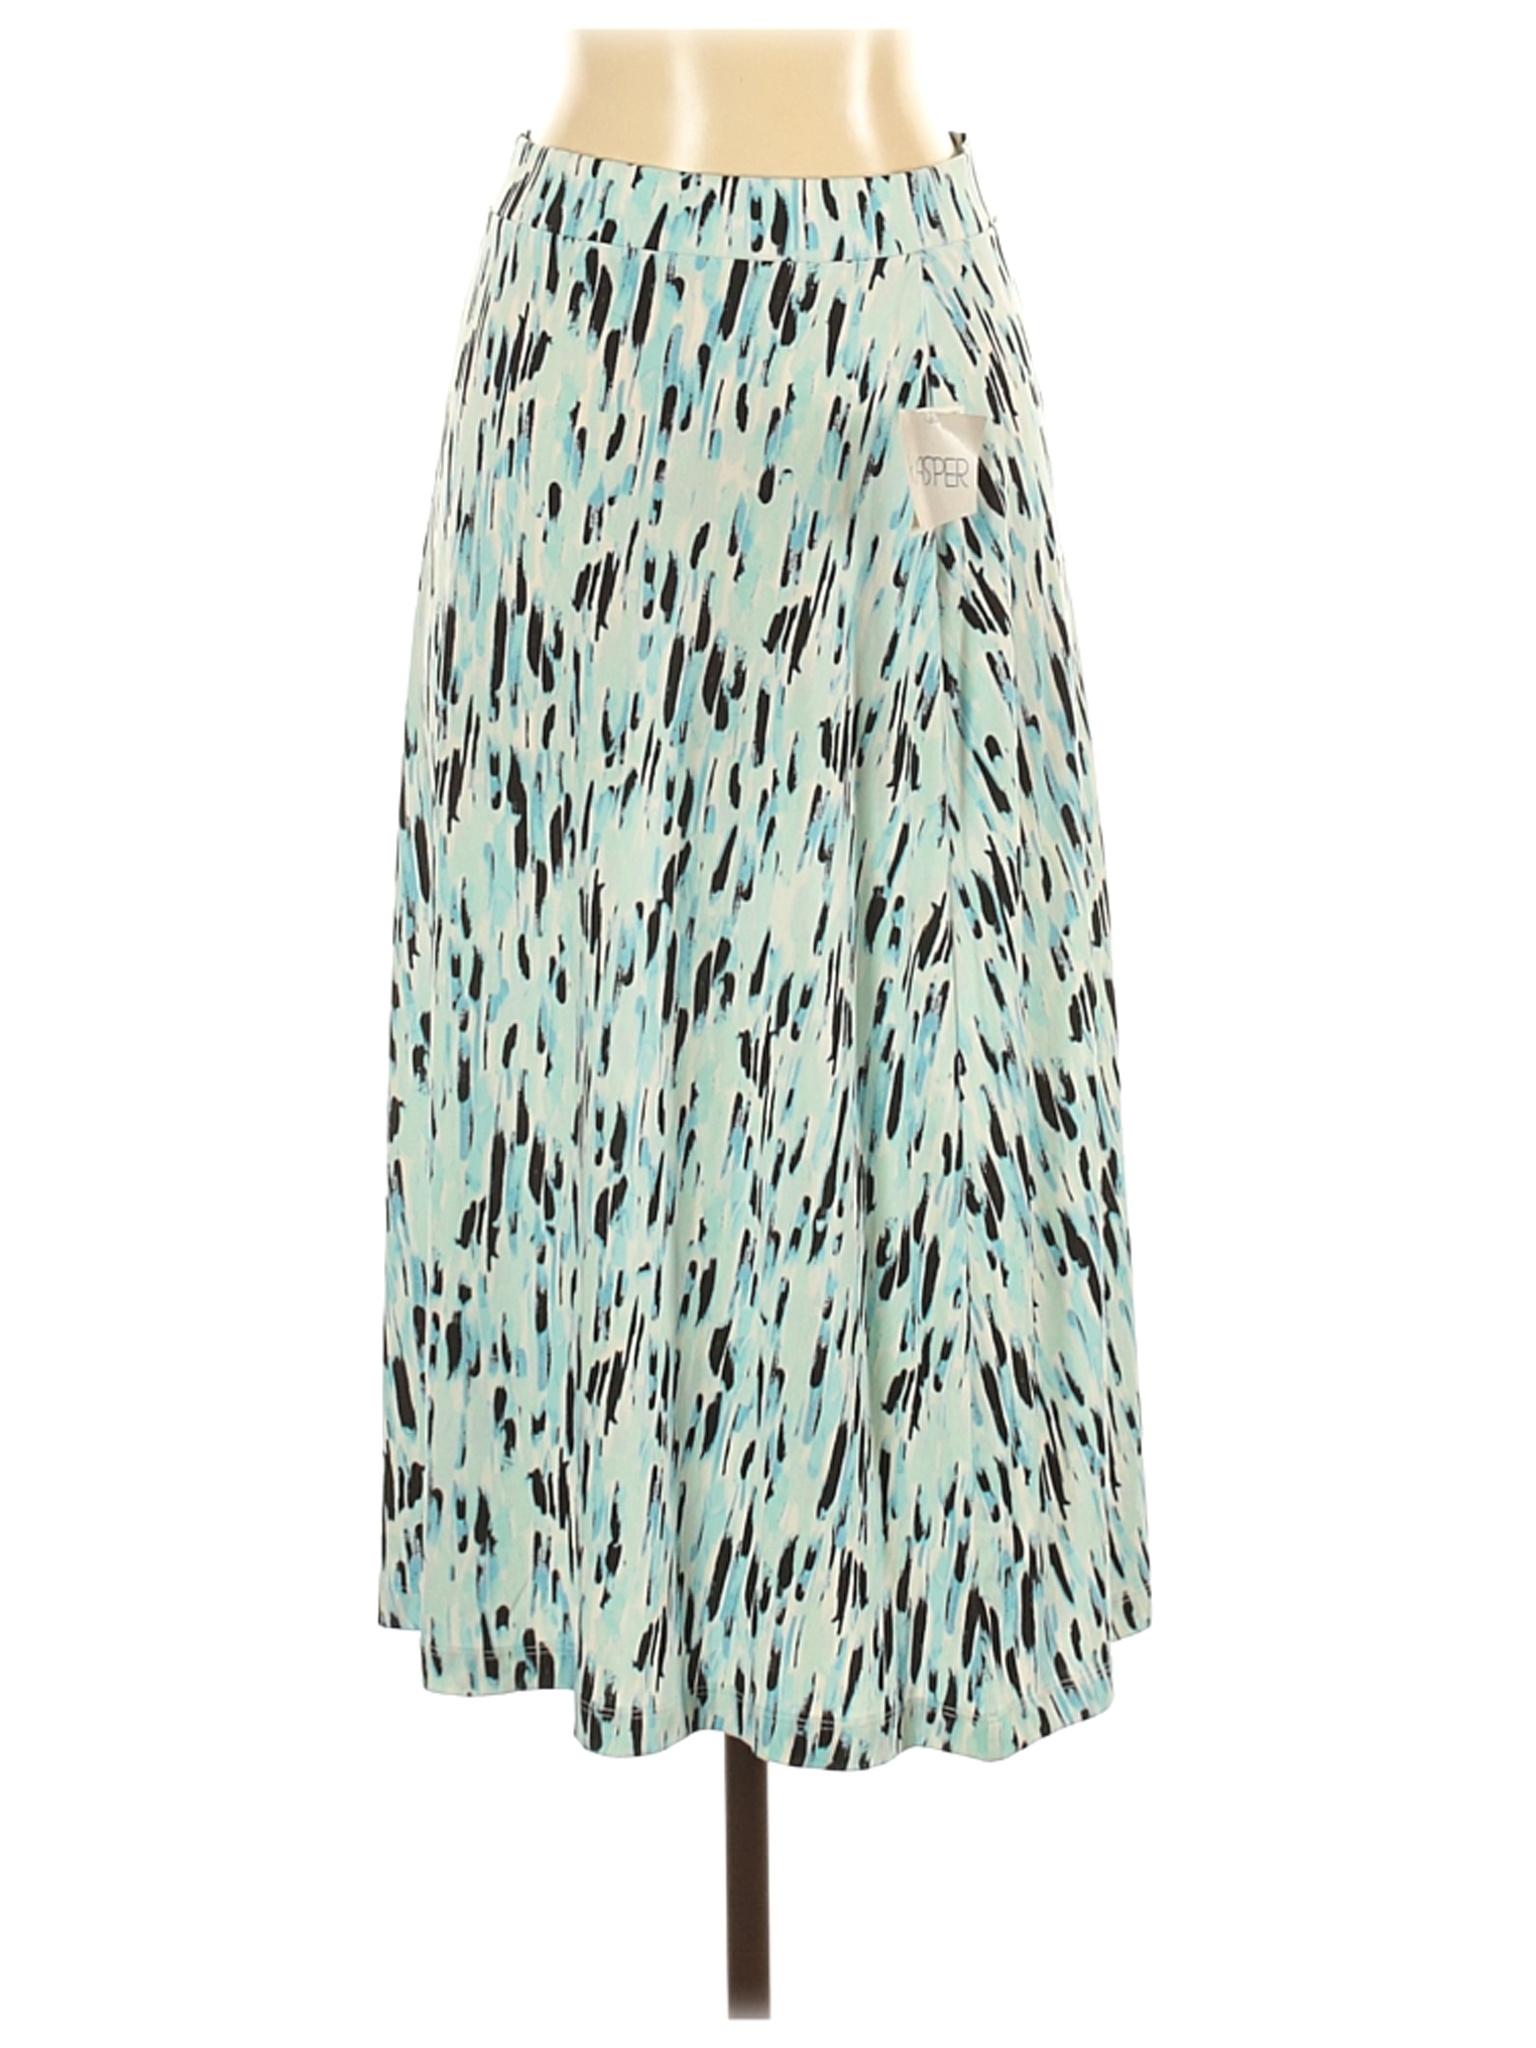 NWT Kasper Women Blue Casual Skirt XS | eBay